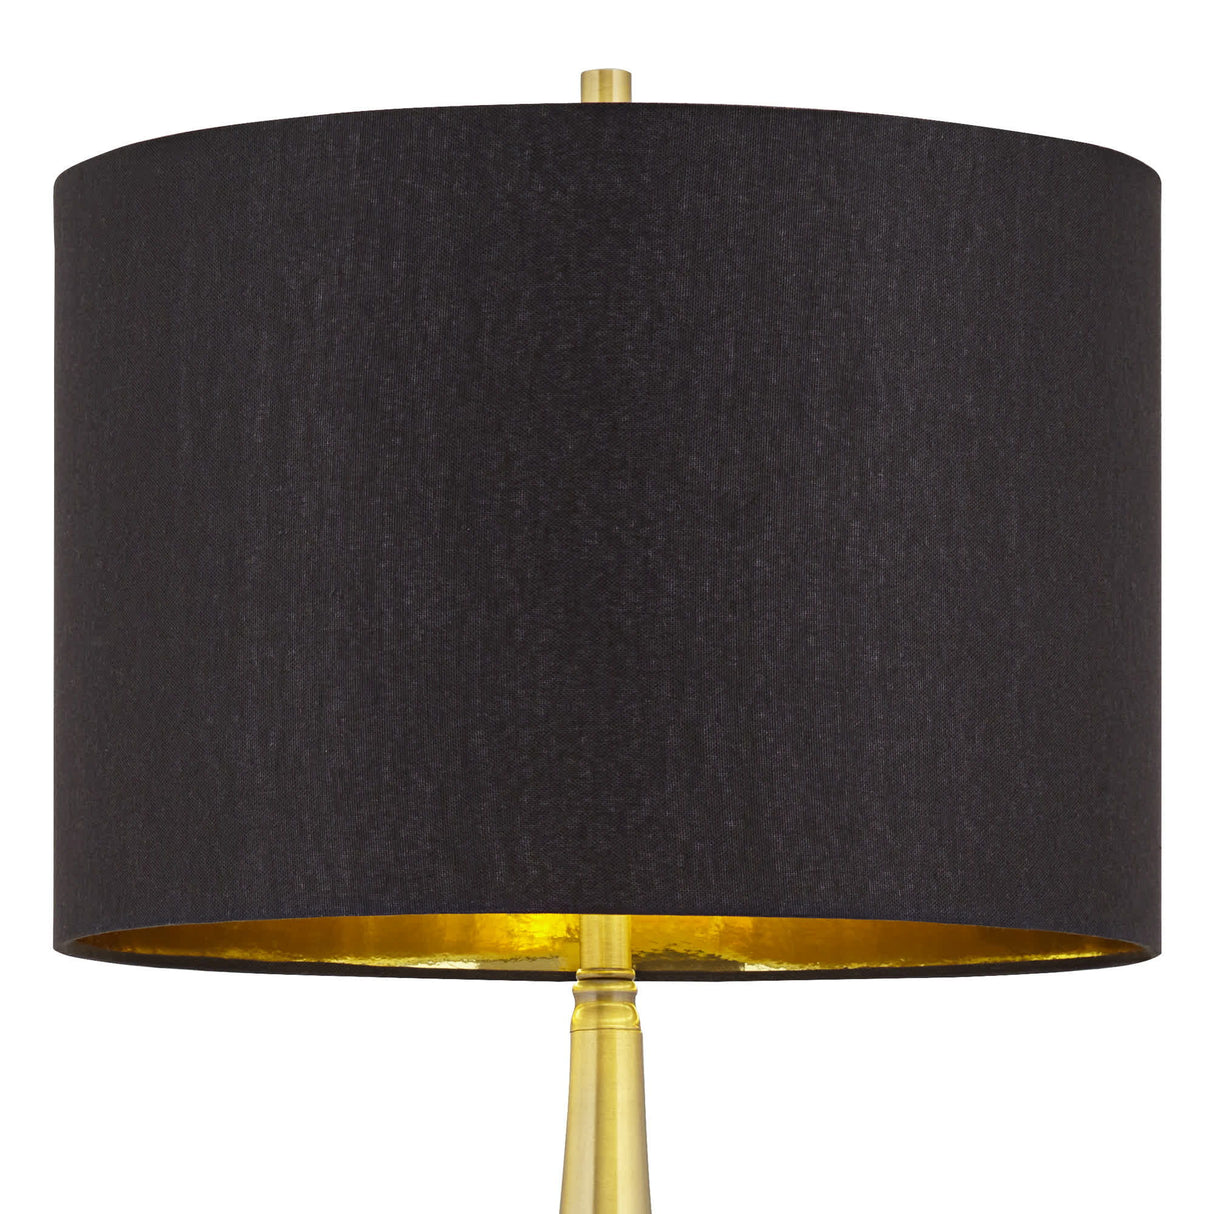 Eleanor - Table Lamp - Antique Brass